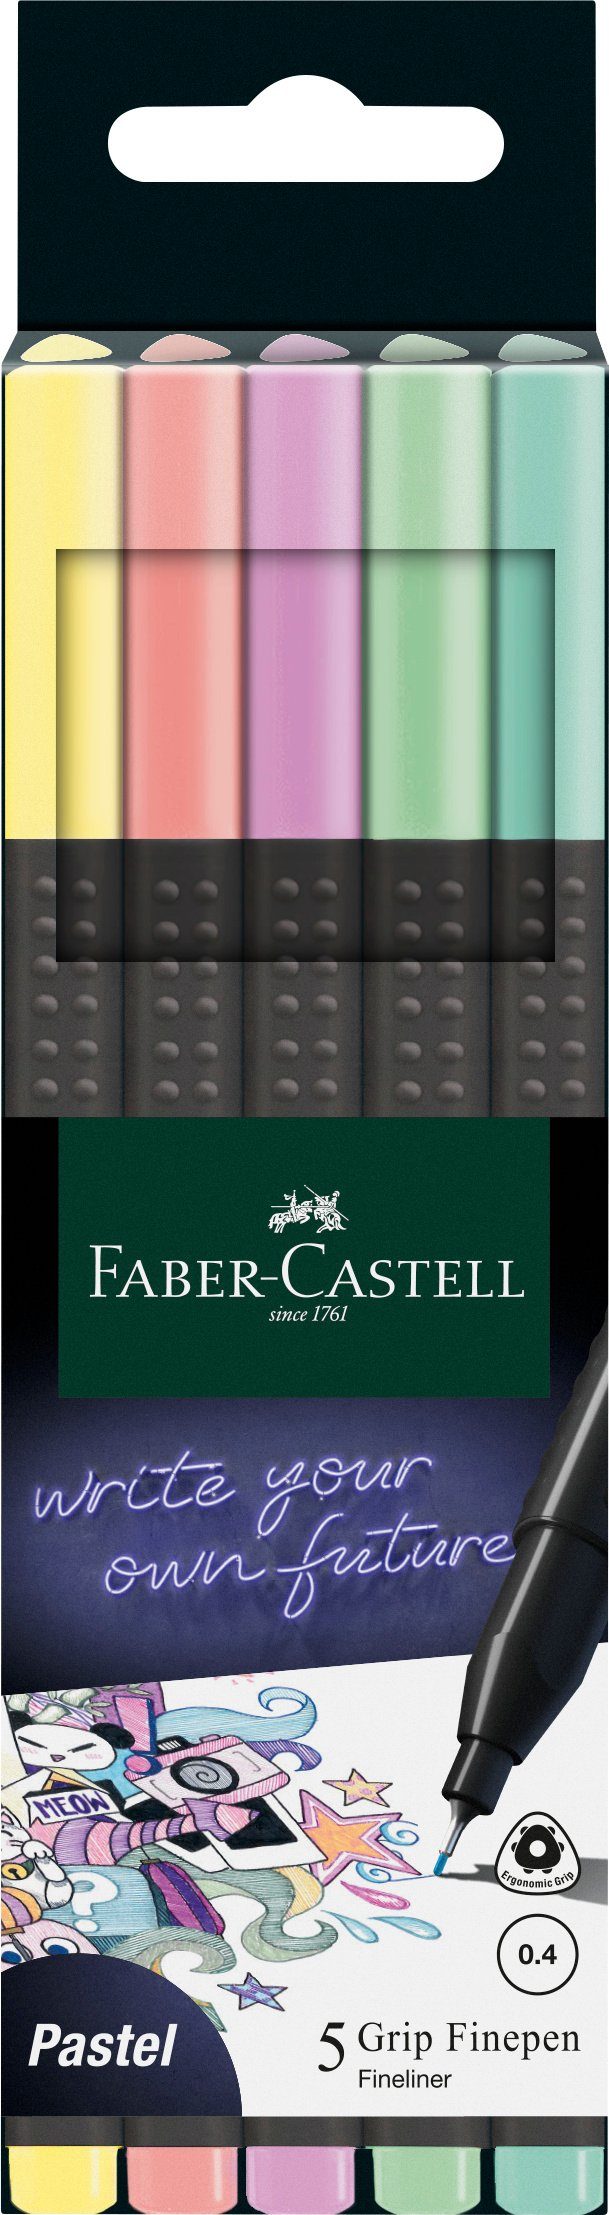 Faber-Castell Fineliner Grip Finepen pastell 5x DE